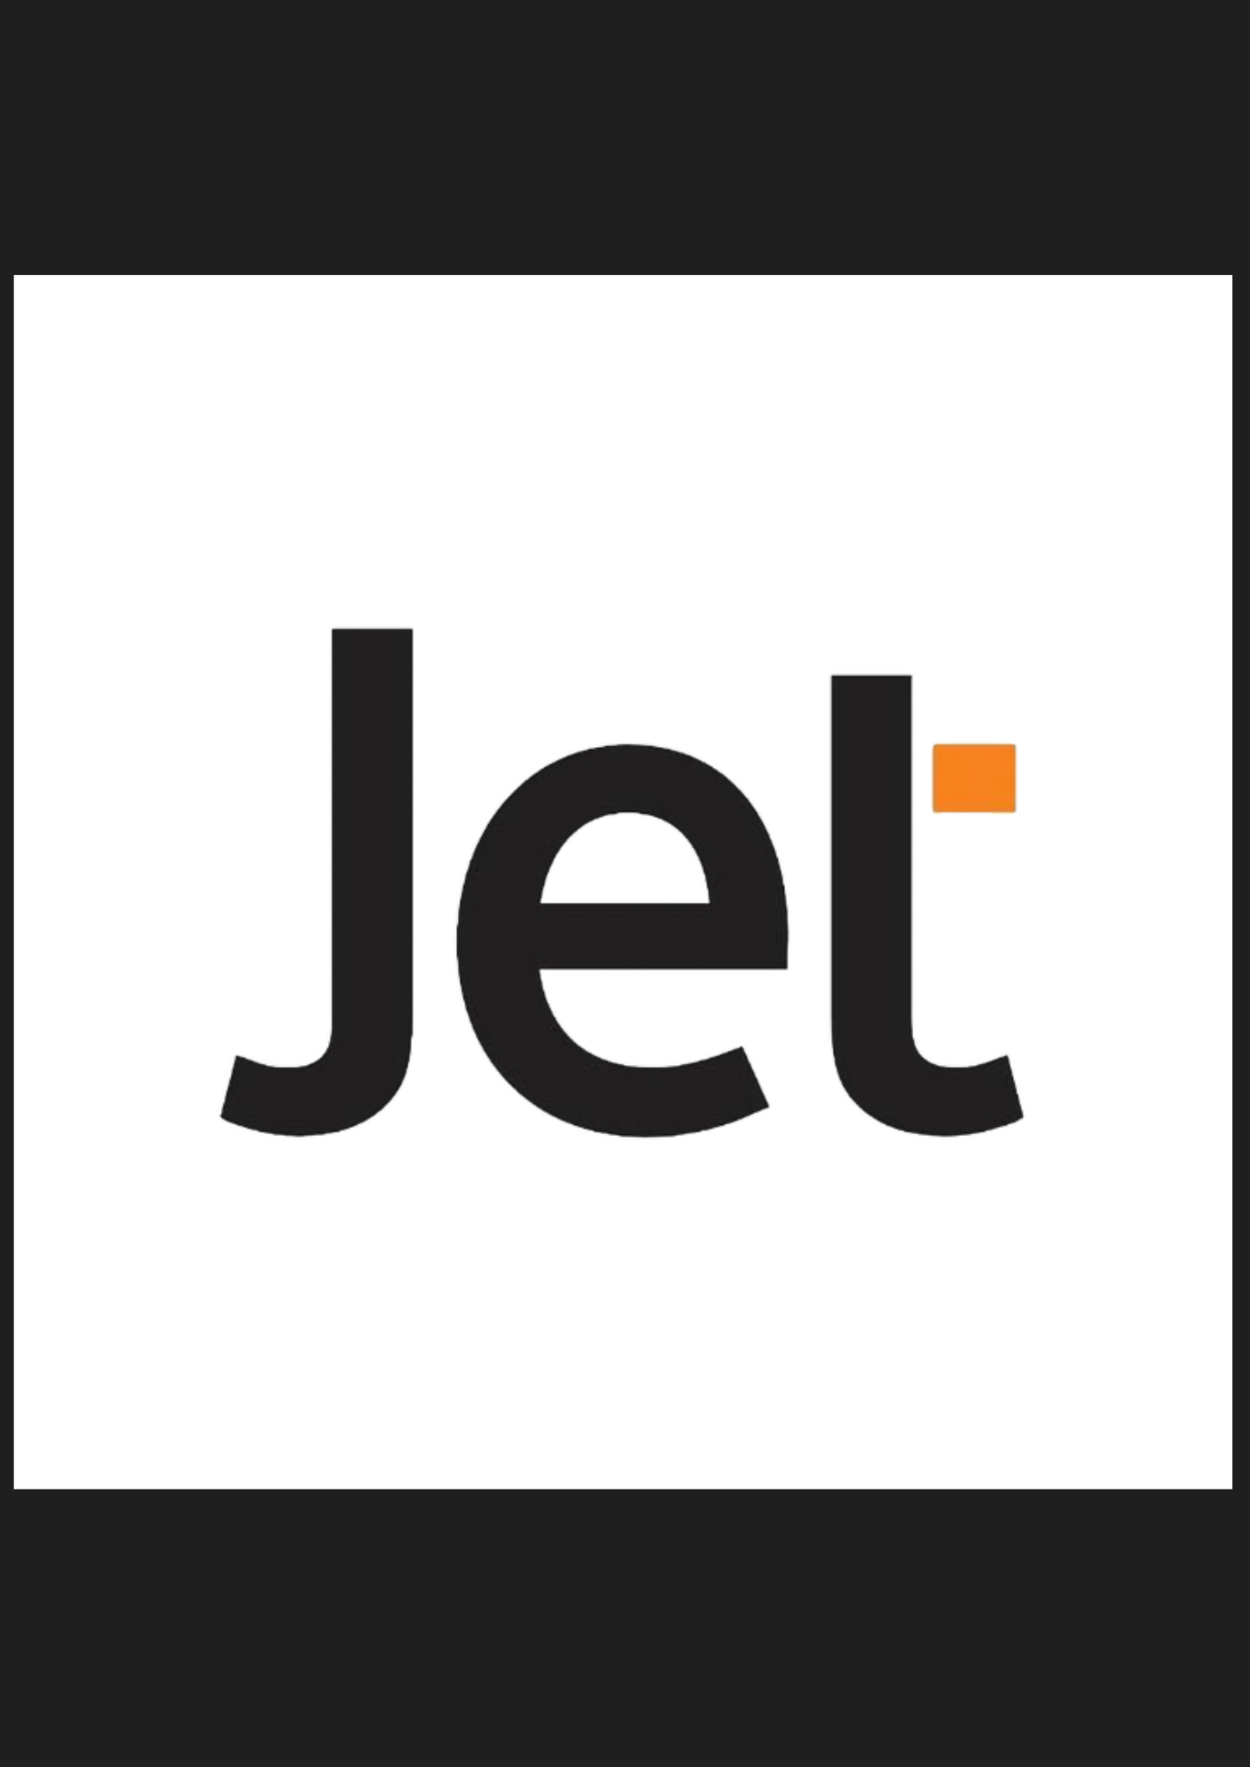 Jet Online Promotional specials